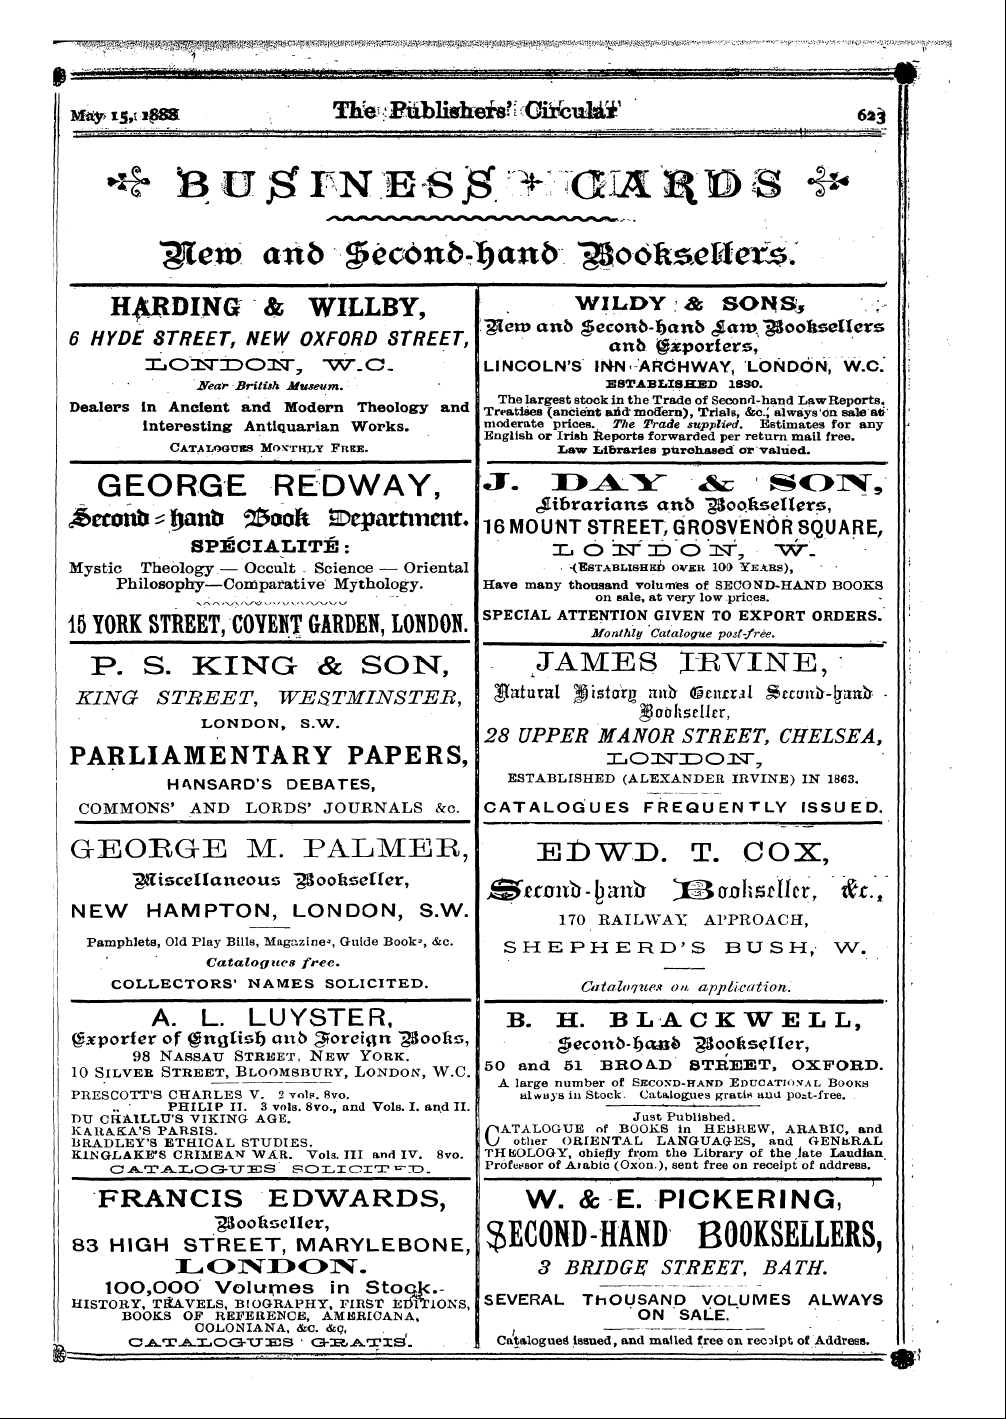 Publishers’ Circular (1880-1890): jS F Y, 1st edition - Ad12511